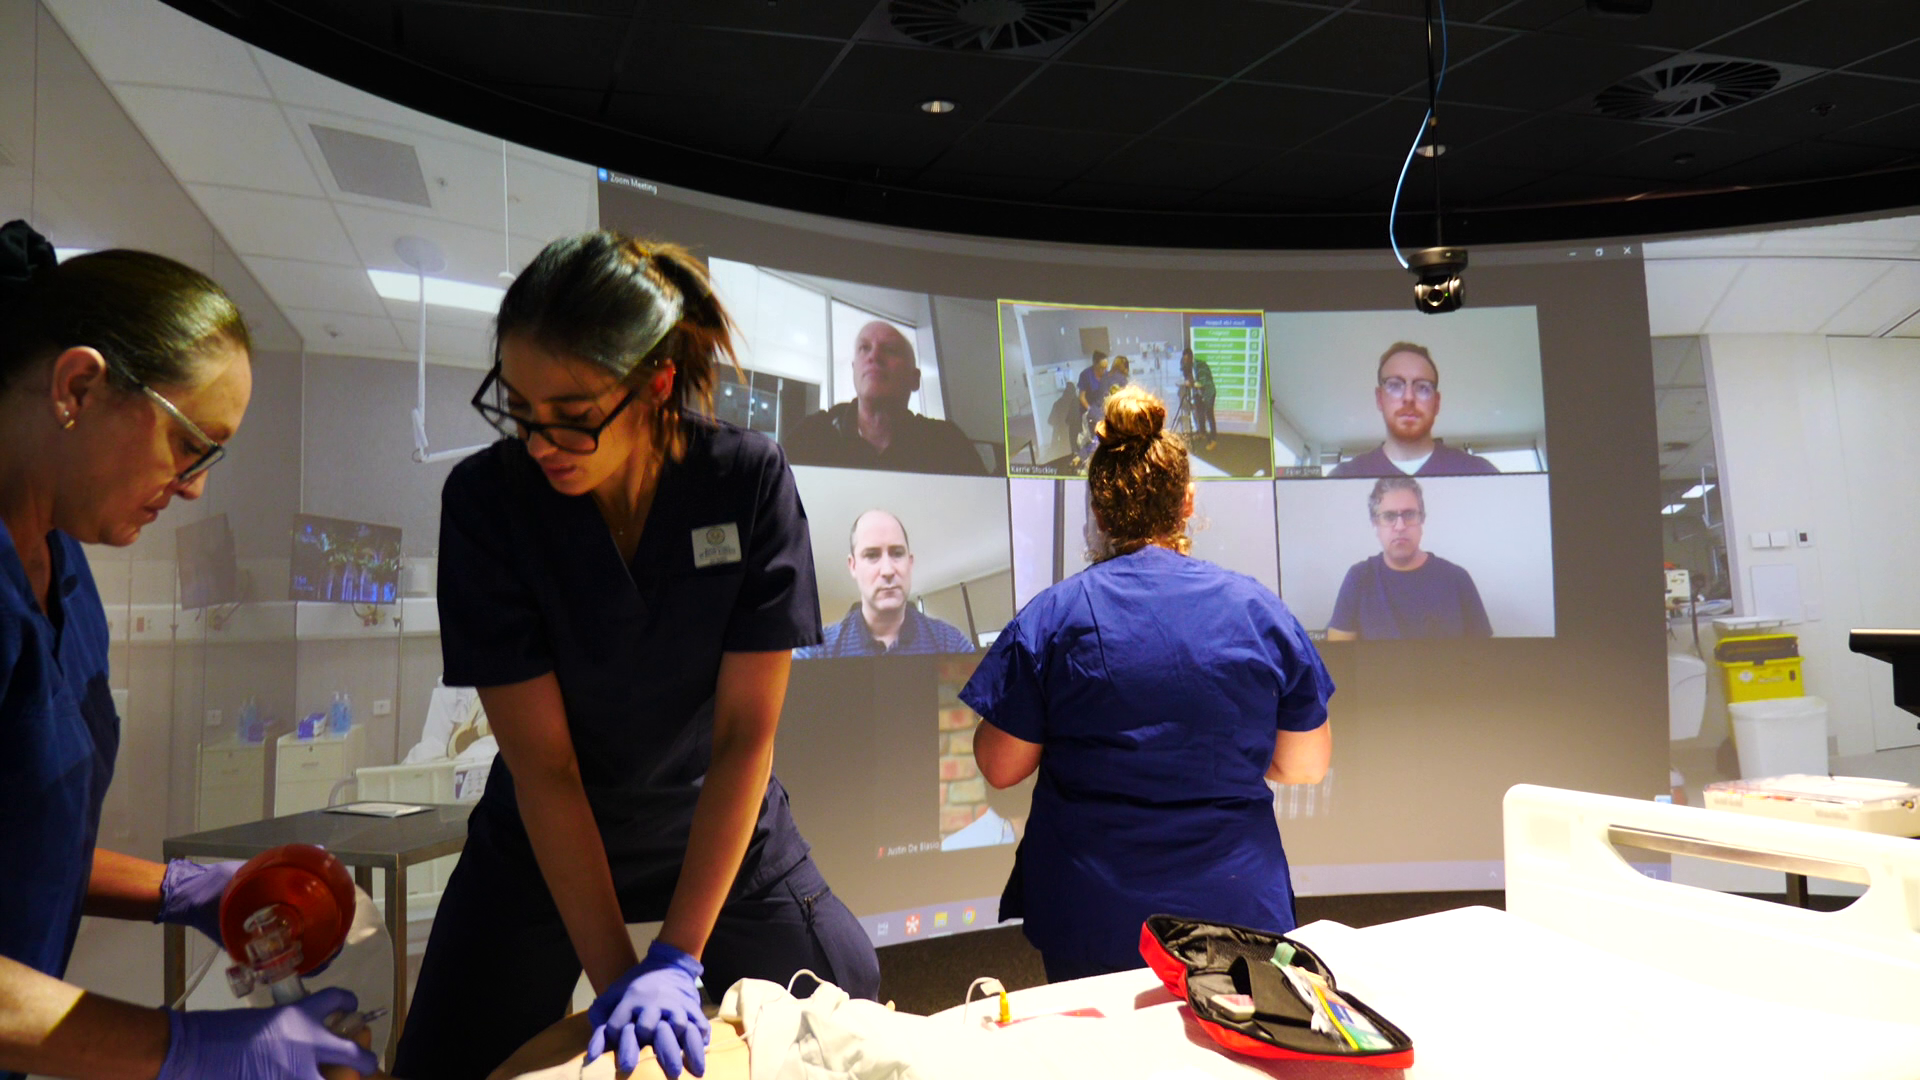 Medical students in scrubs using Igloo for teams meetings & education